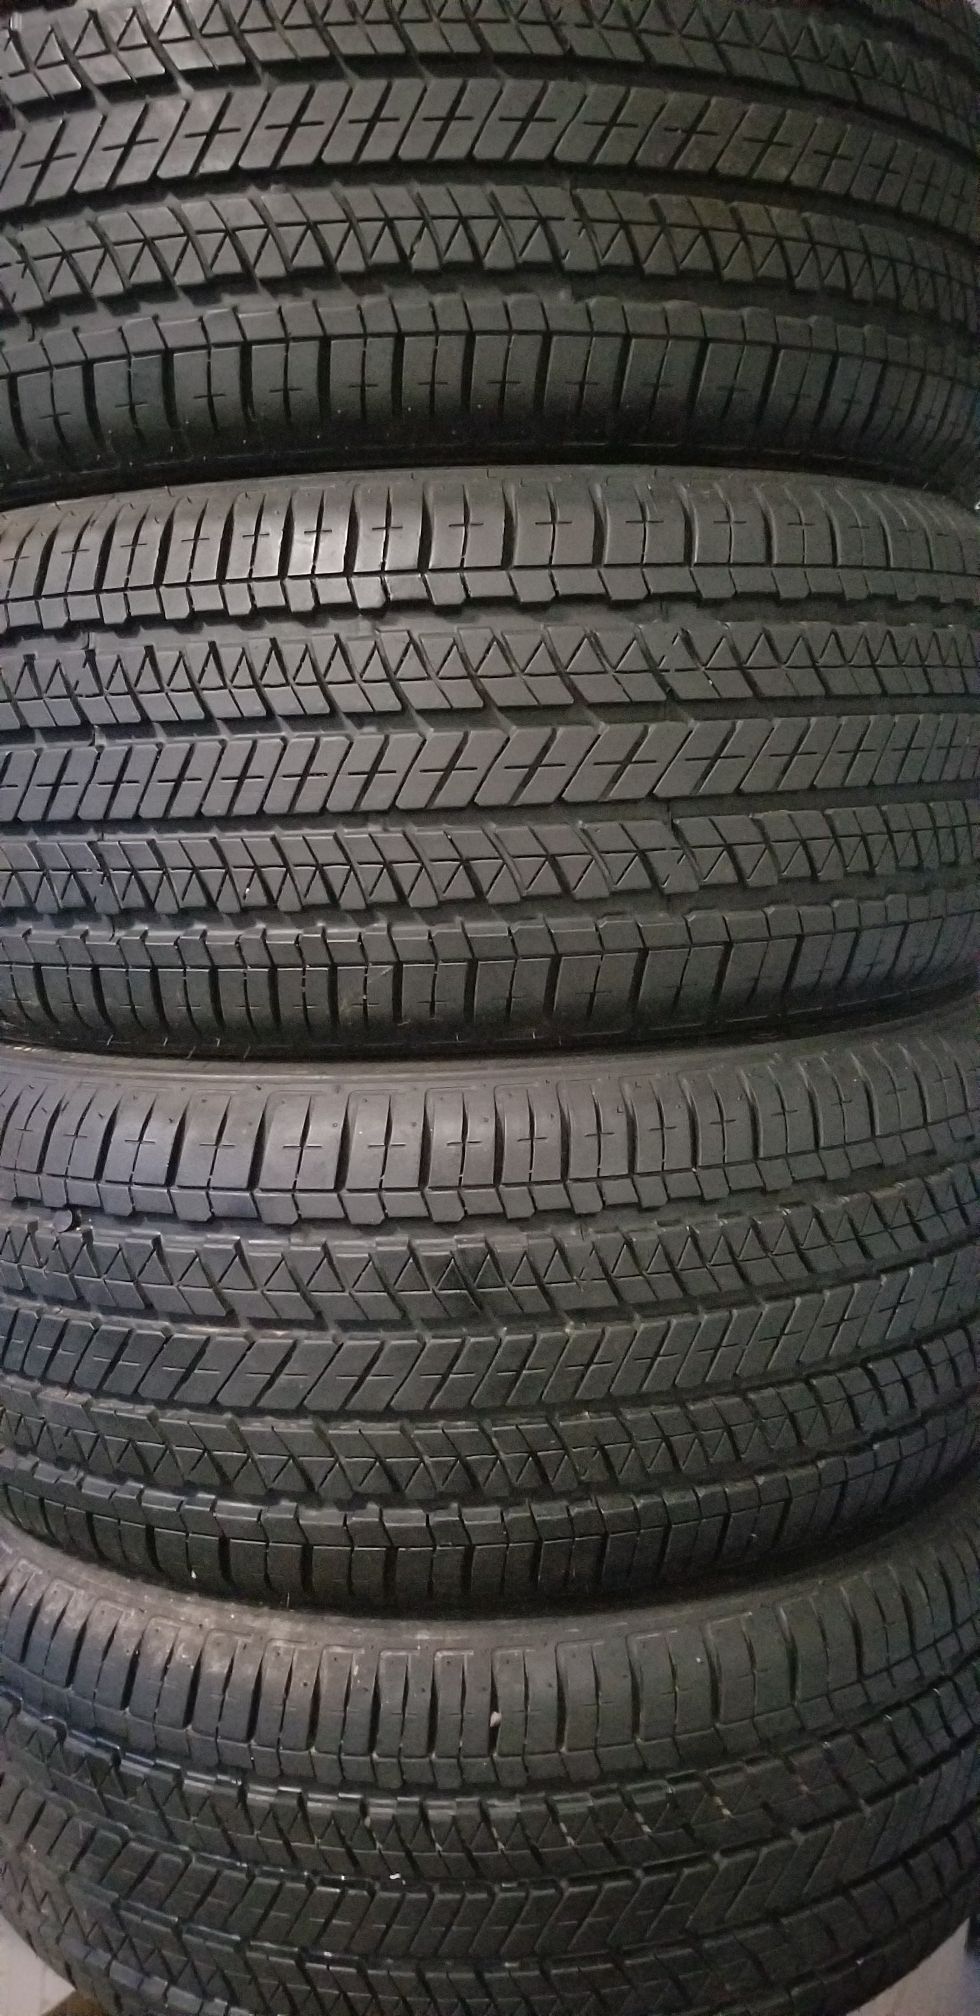 215/45/17 tires